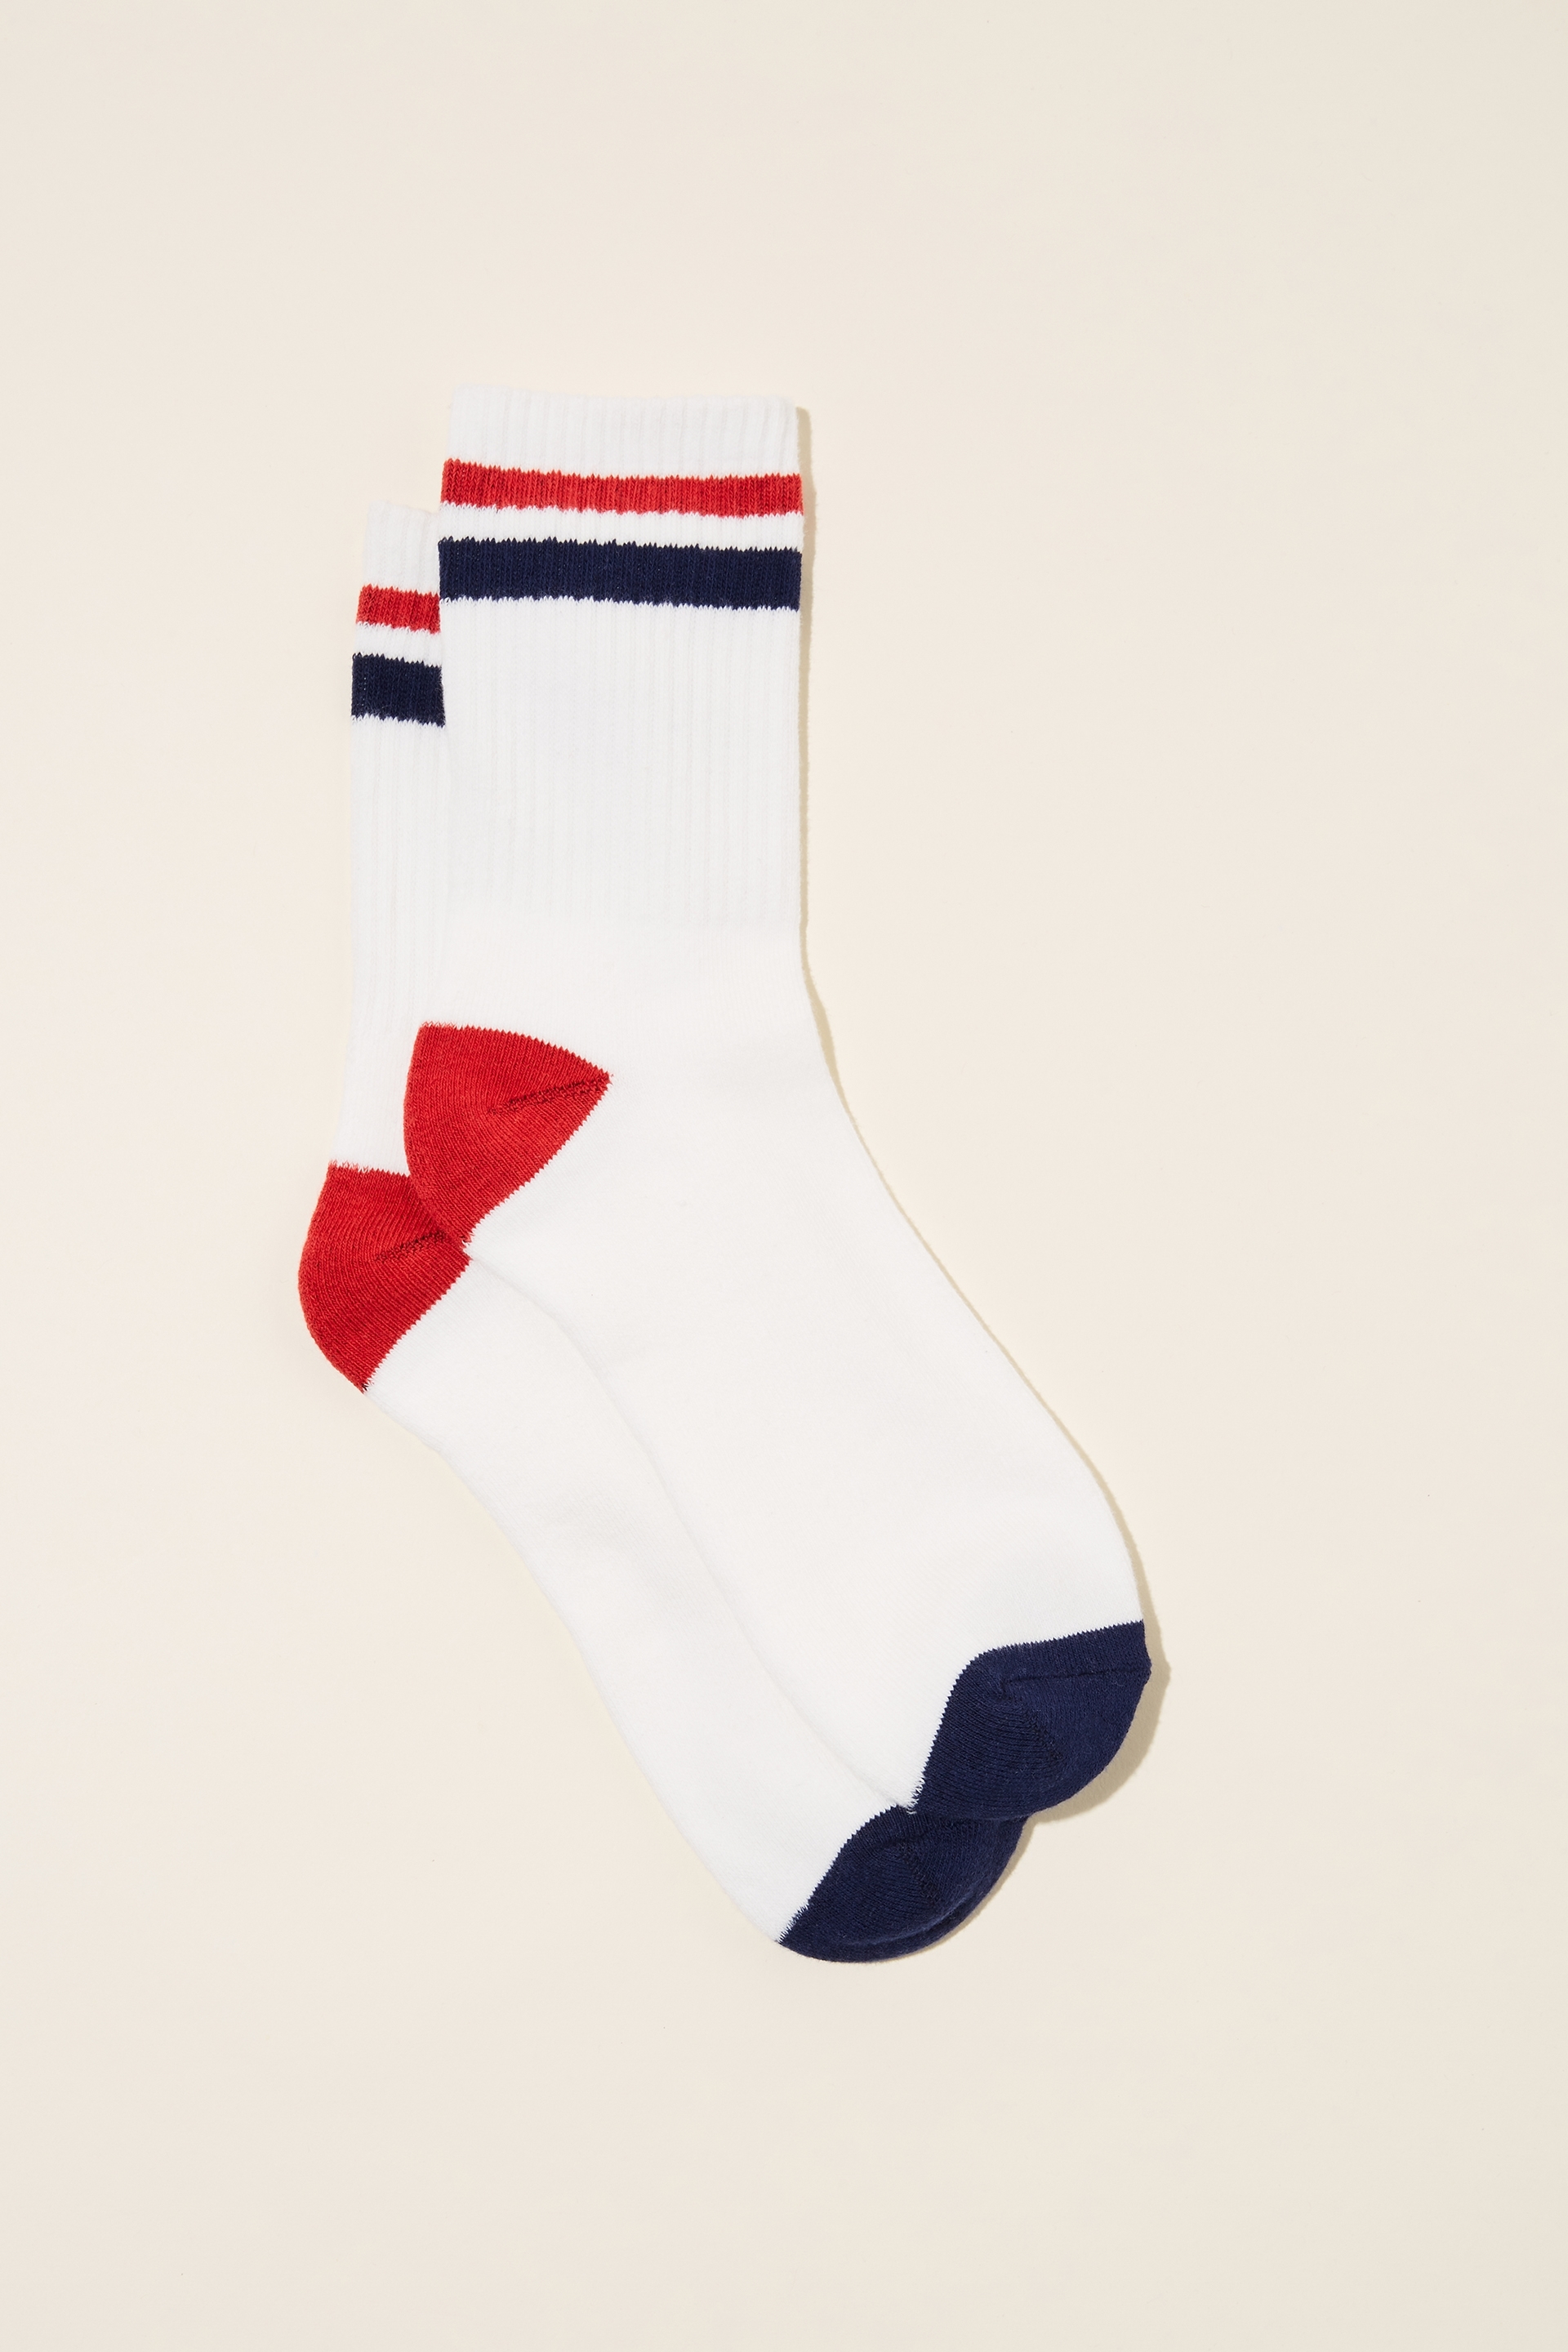 Rubi - Club House Crew Sock - White/red and blue stripe